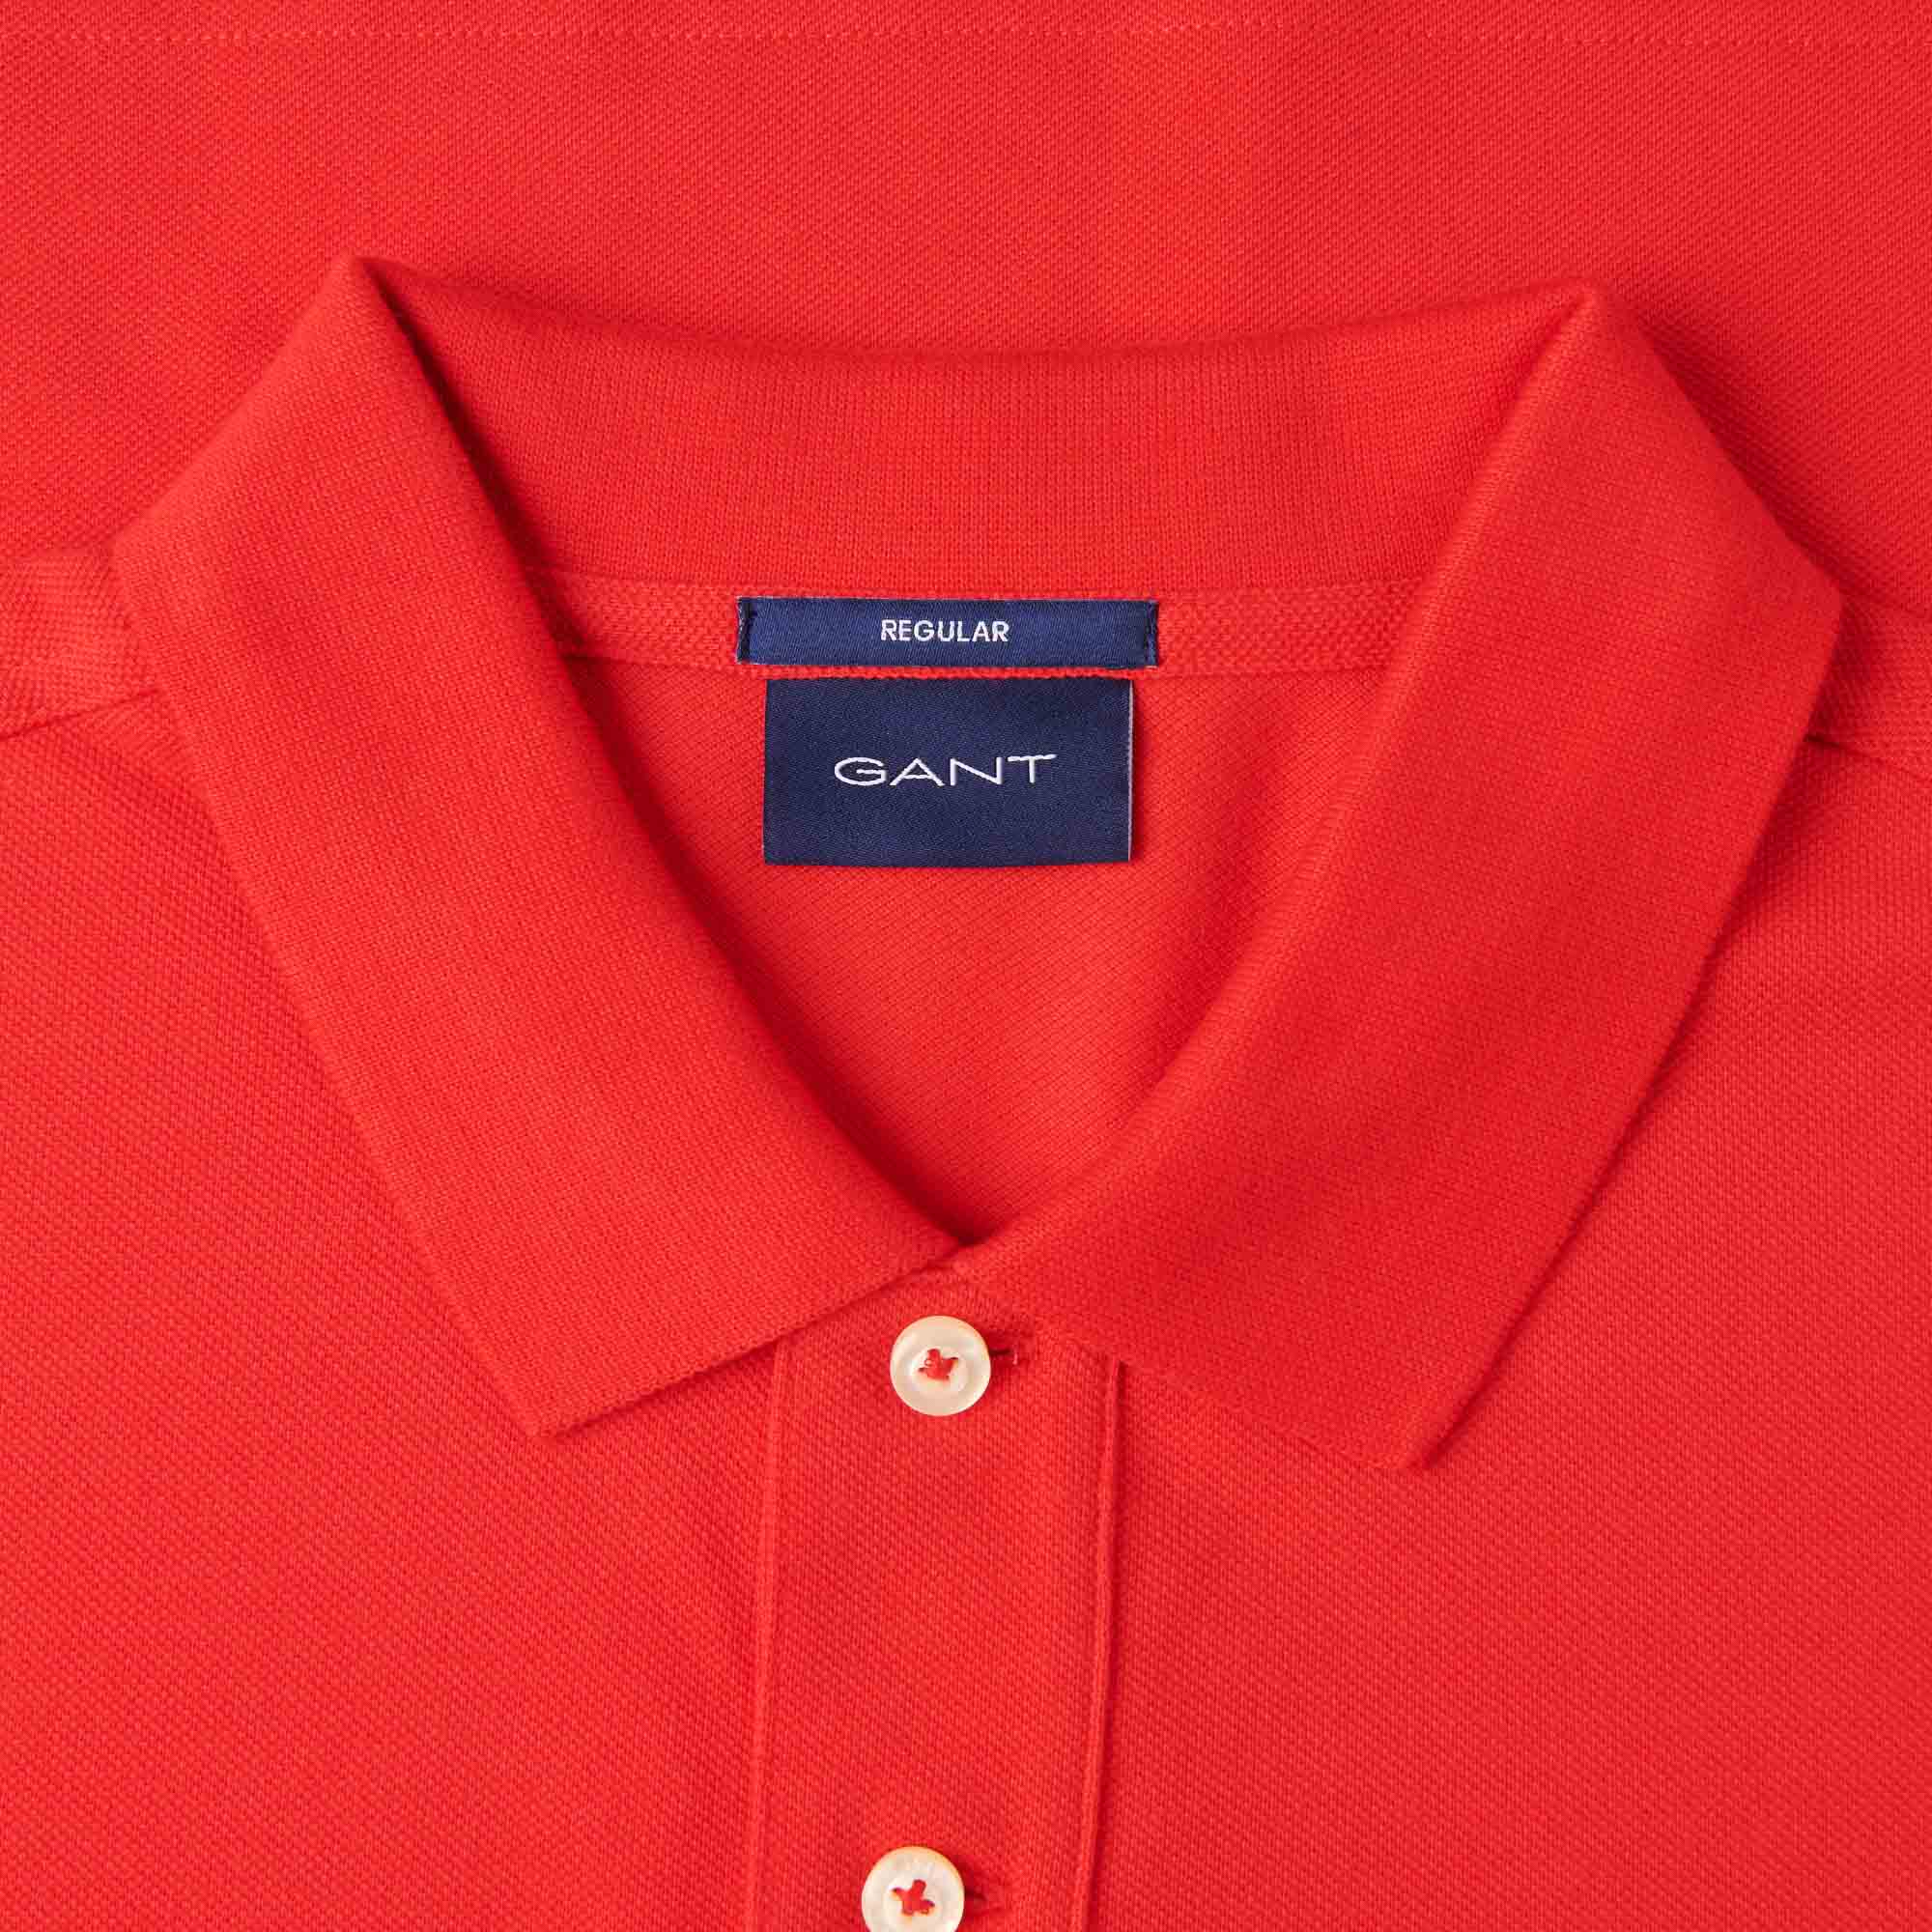 GANT Original Polo Shirt - Pennyroyal - Red Bright Sports